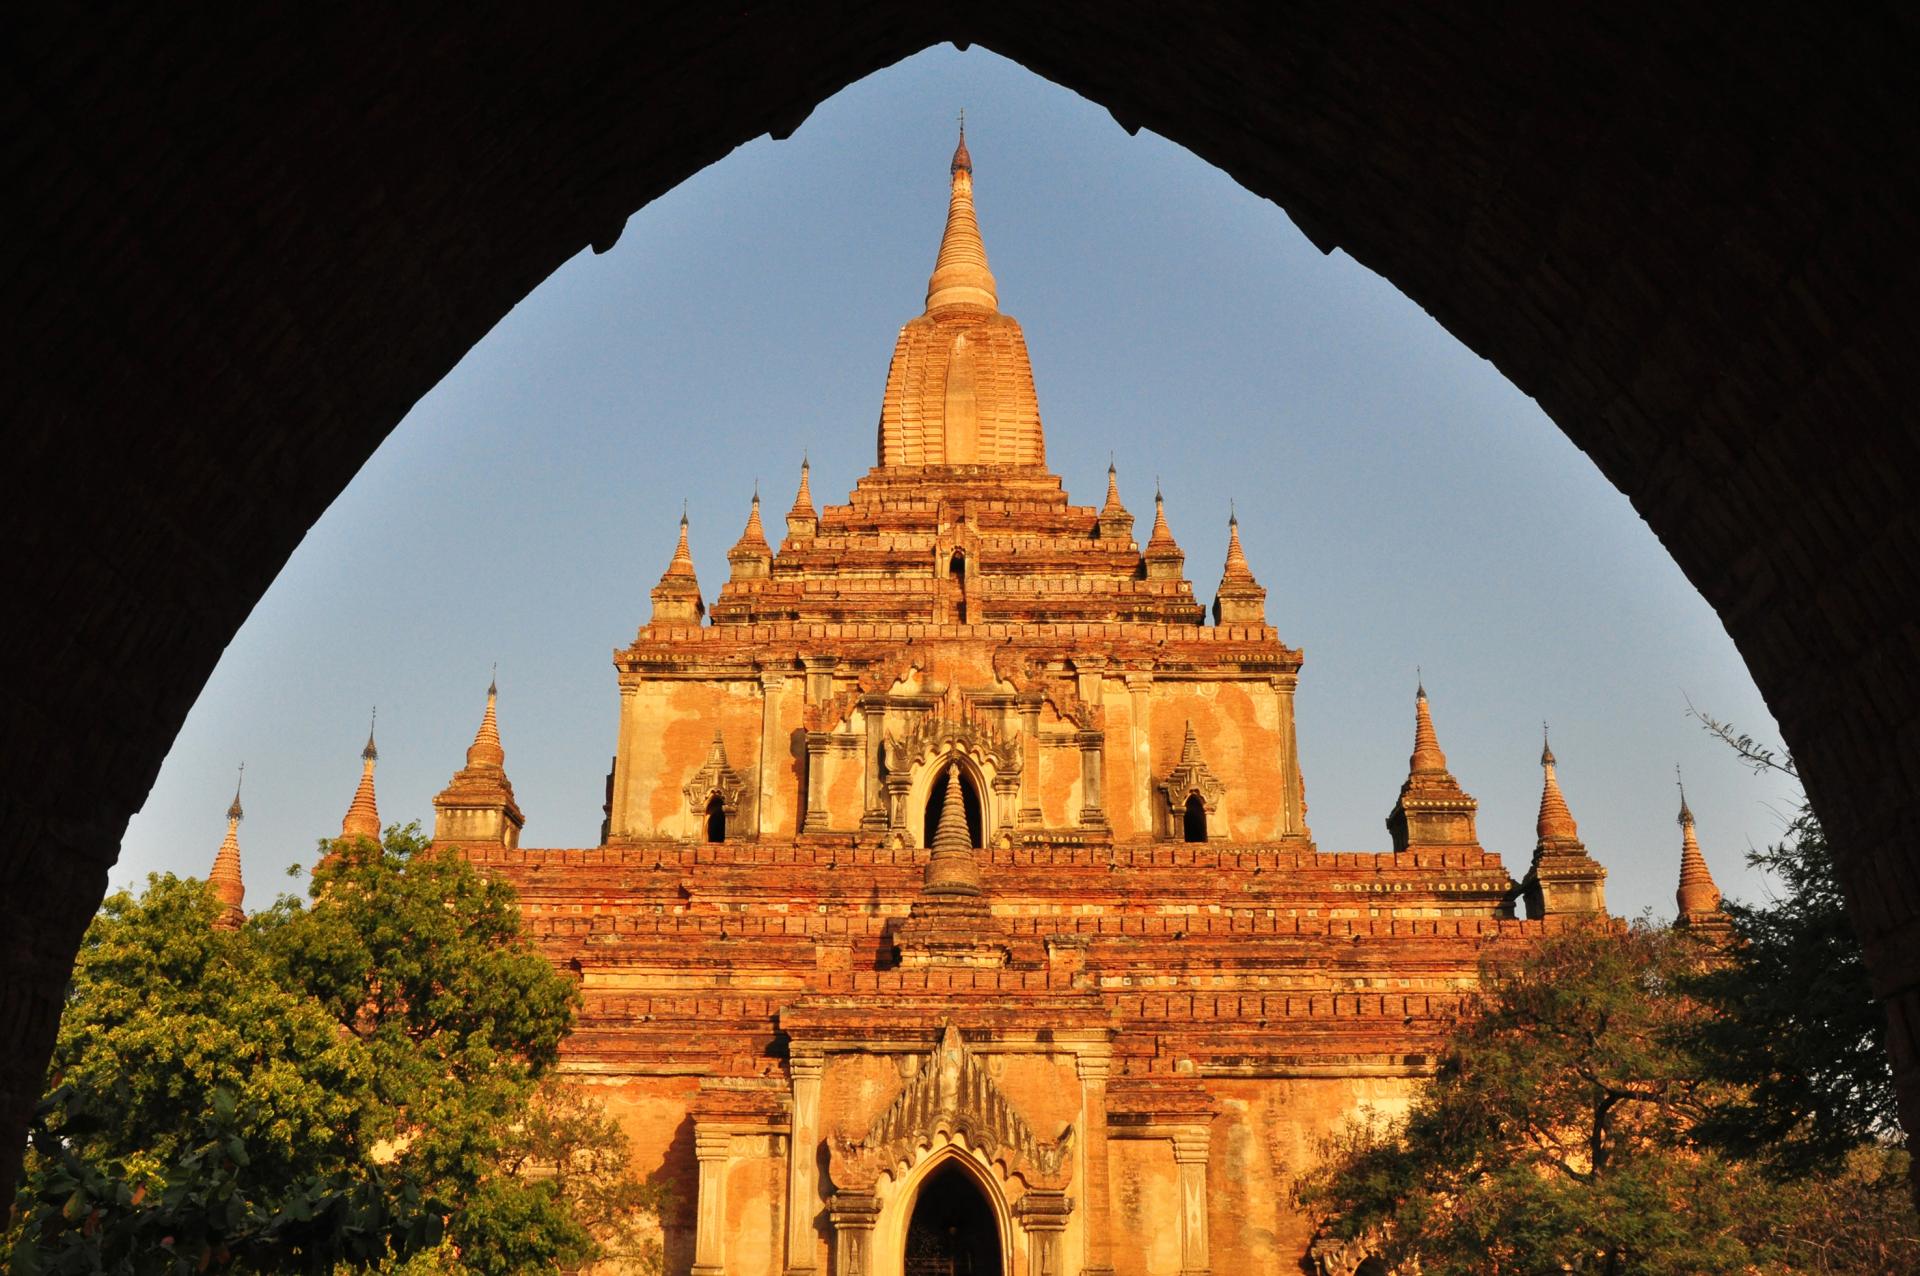 London Photography Awards Winner - Pagodas in Bagan